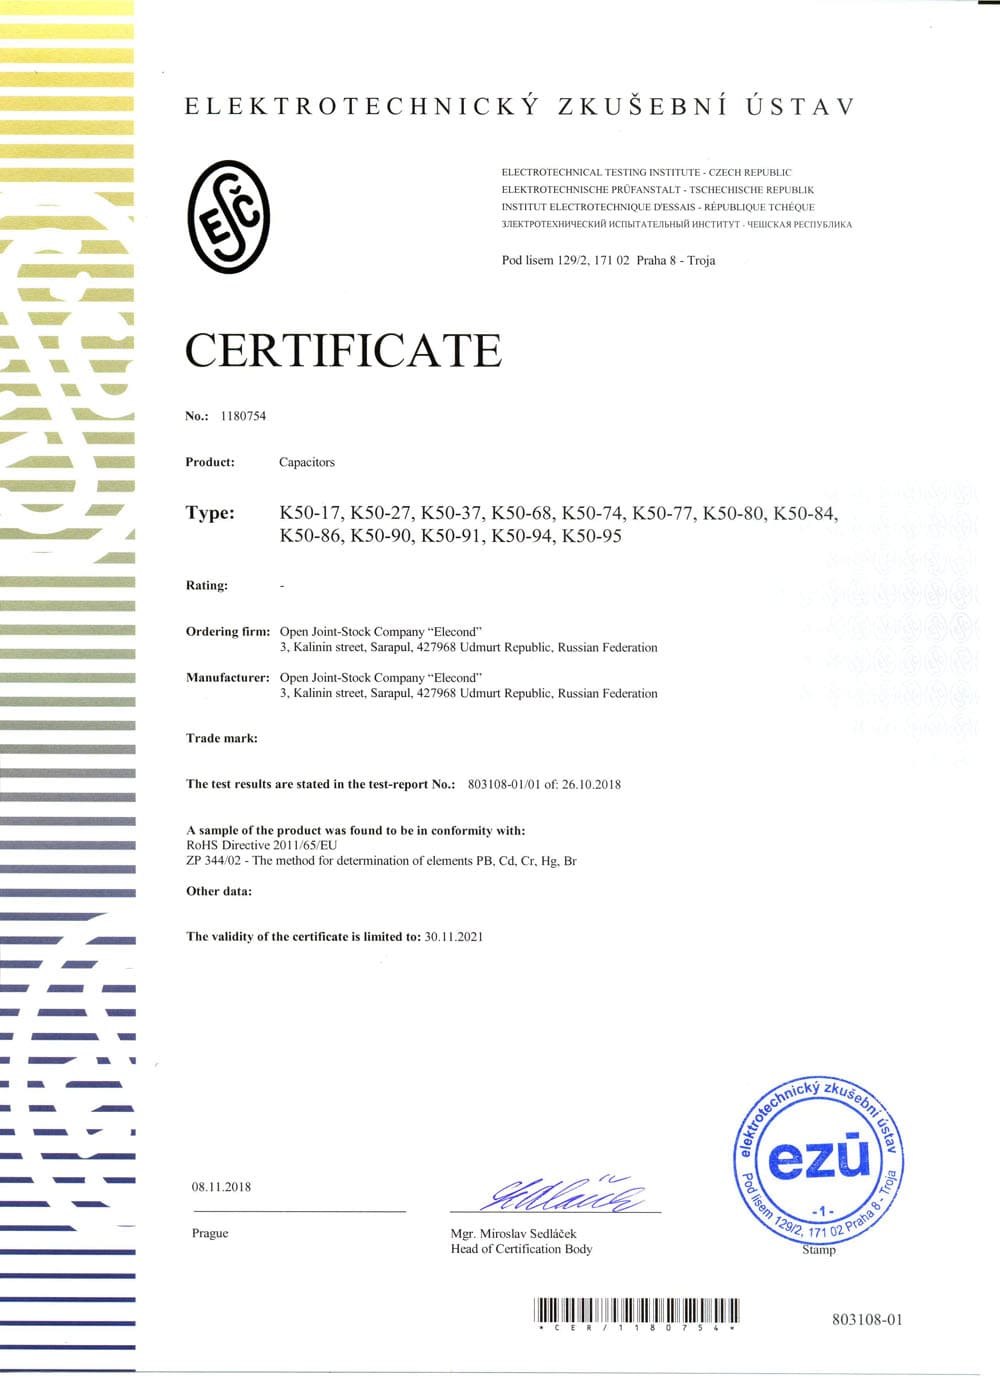 Сертификат соответствия директиве ROHS 2011/65/EU